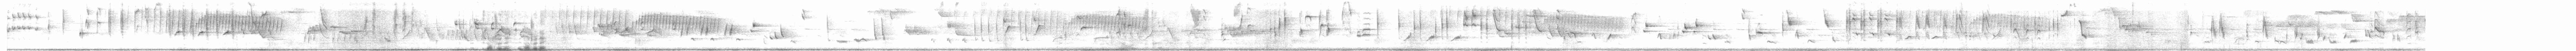 spectrogram_small.jpeg